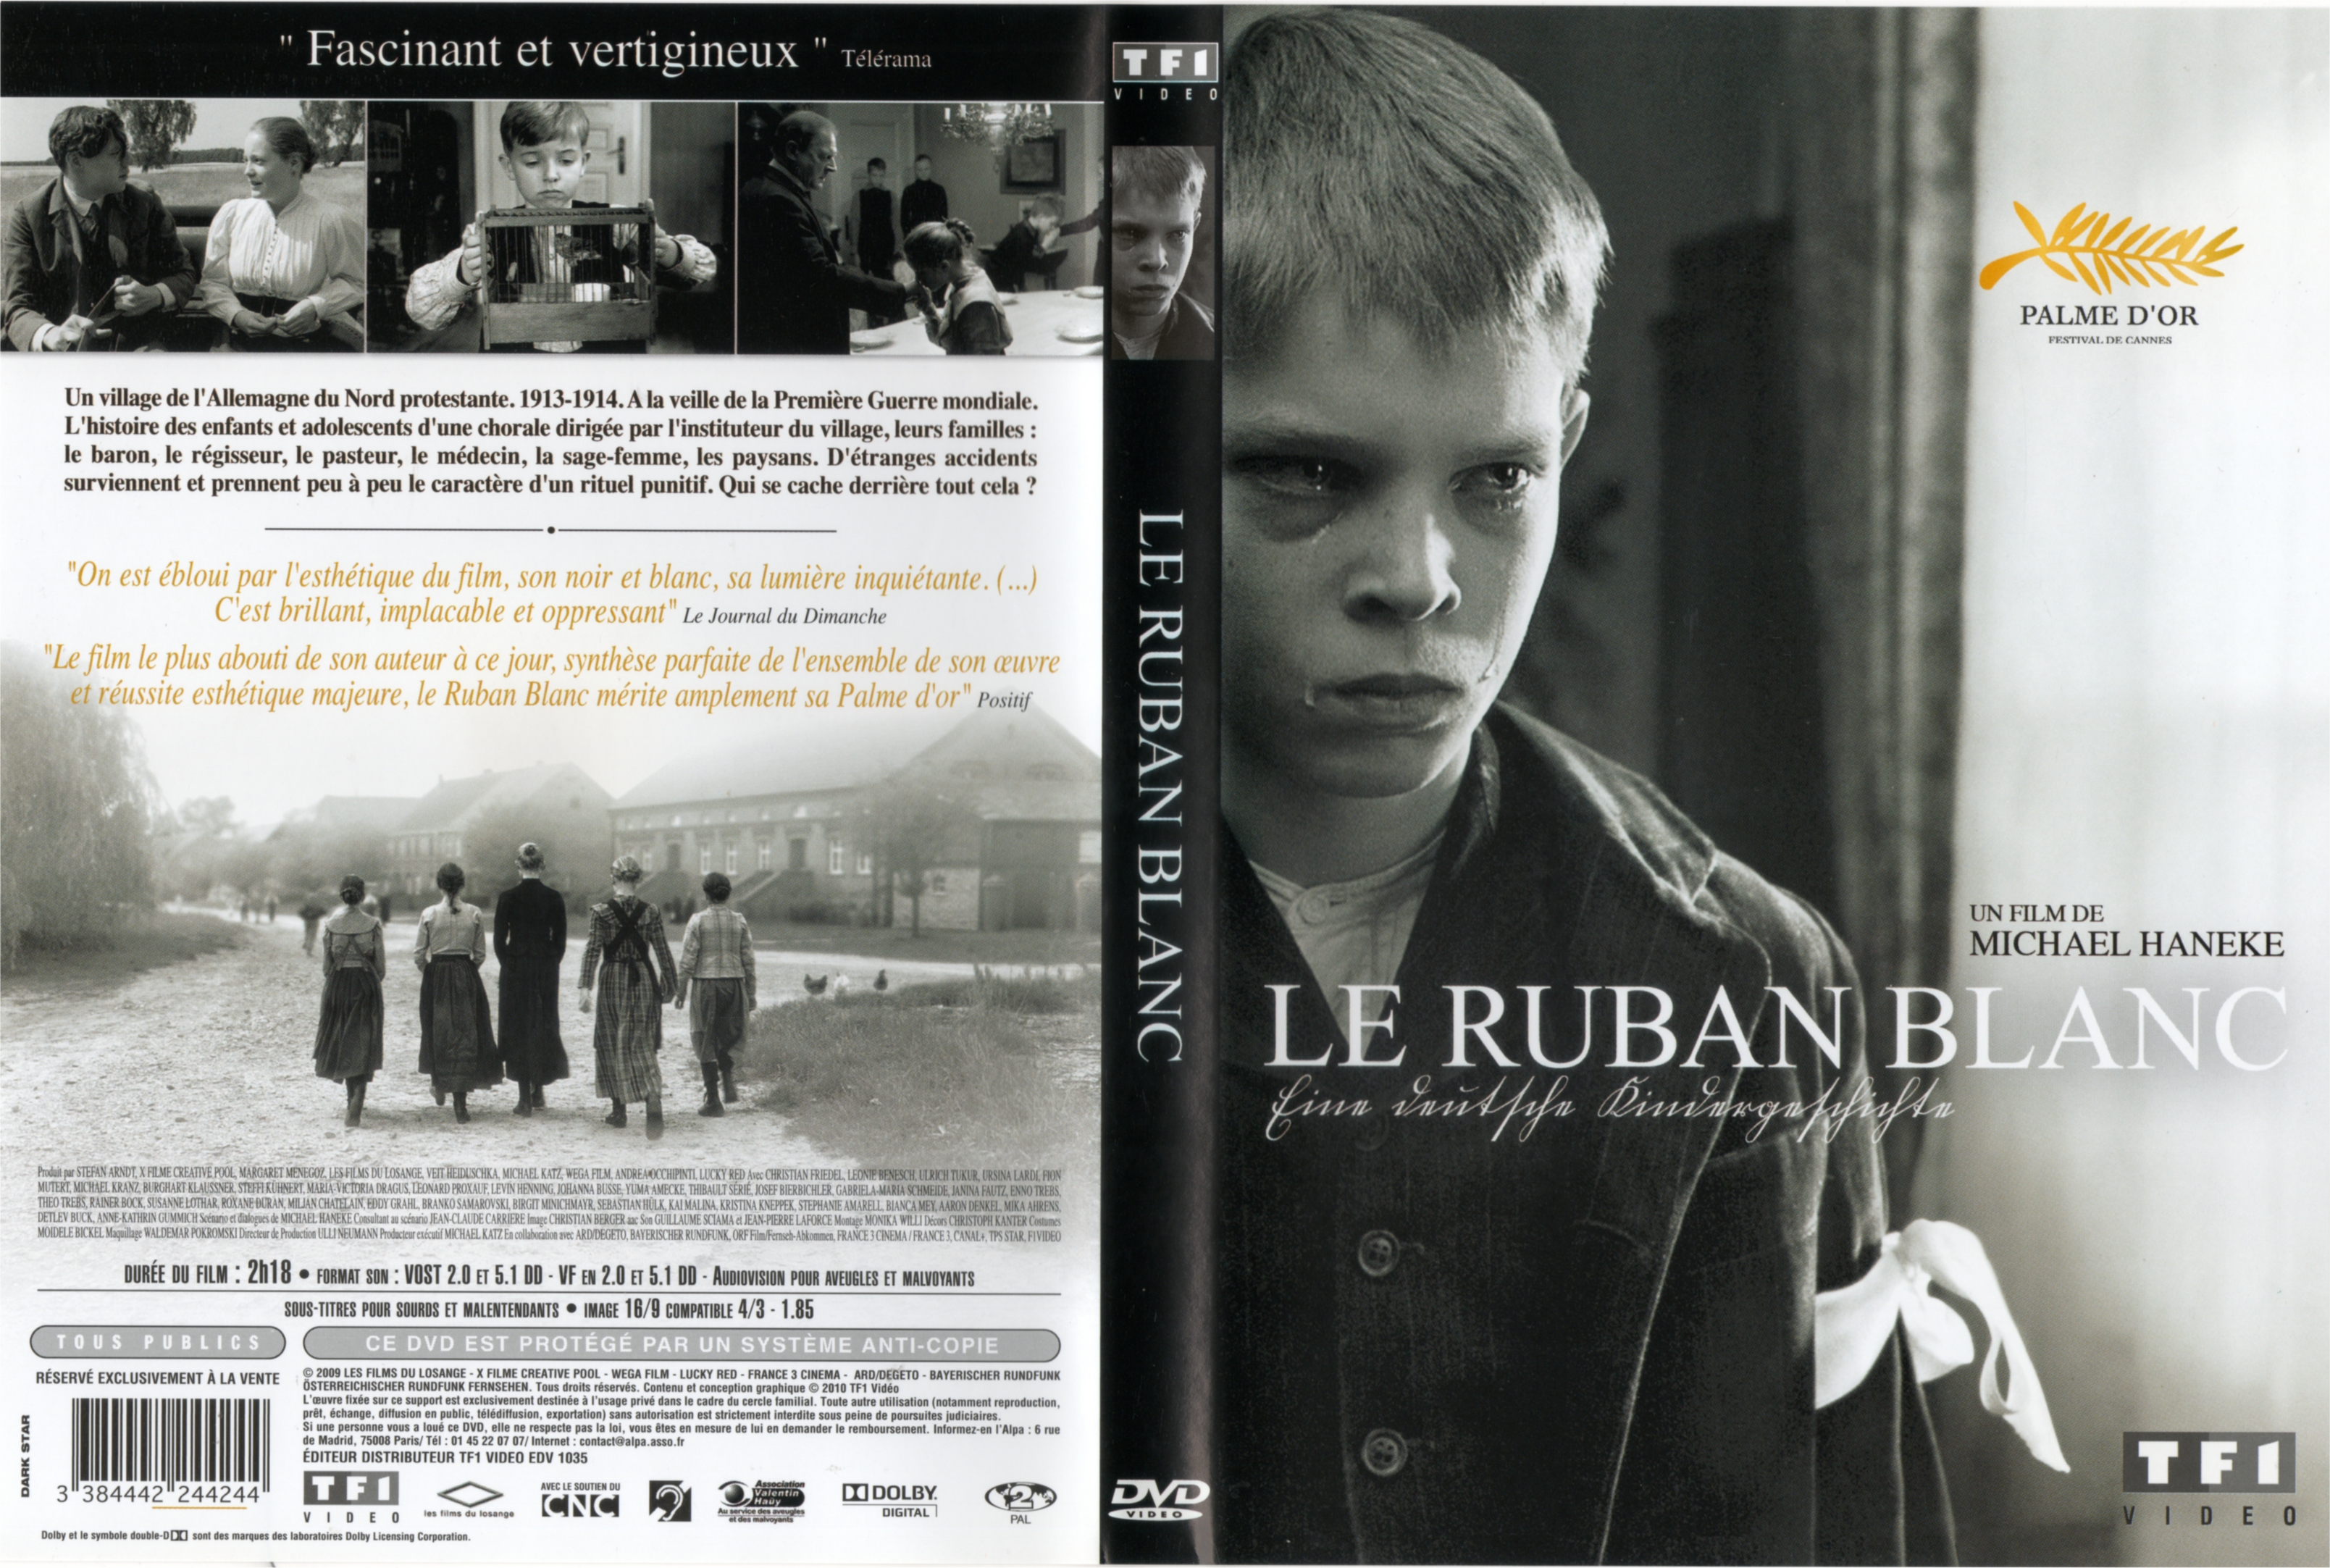 Jaquette DVD Le ruban blanc v2